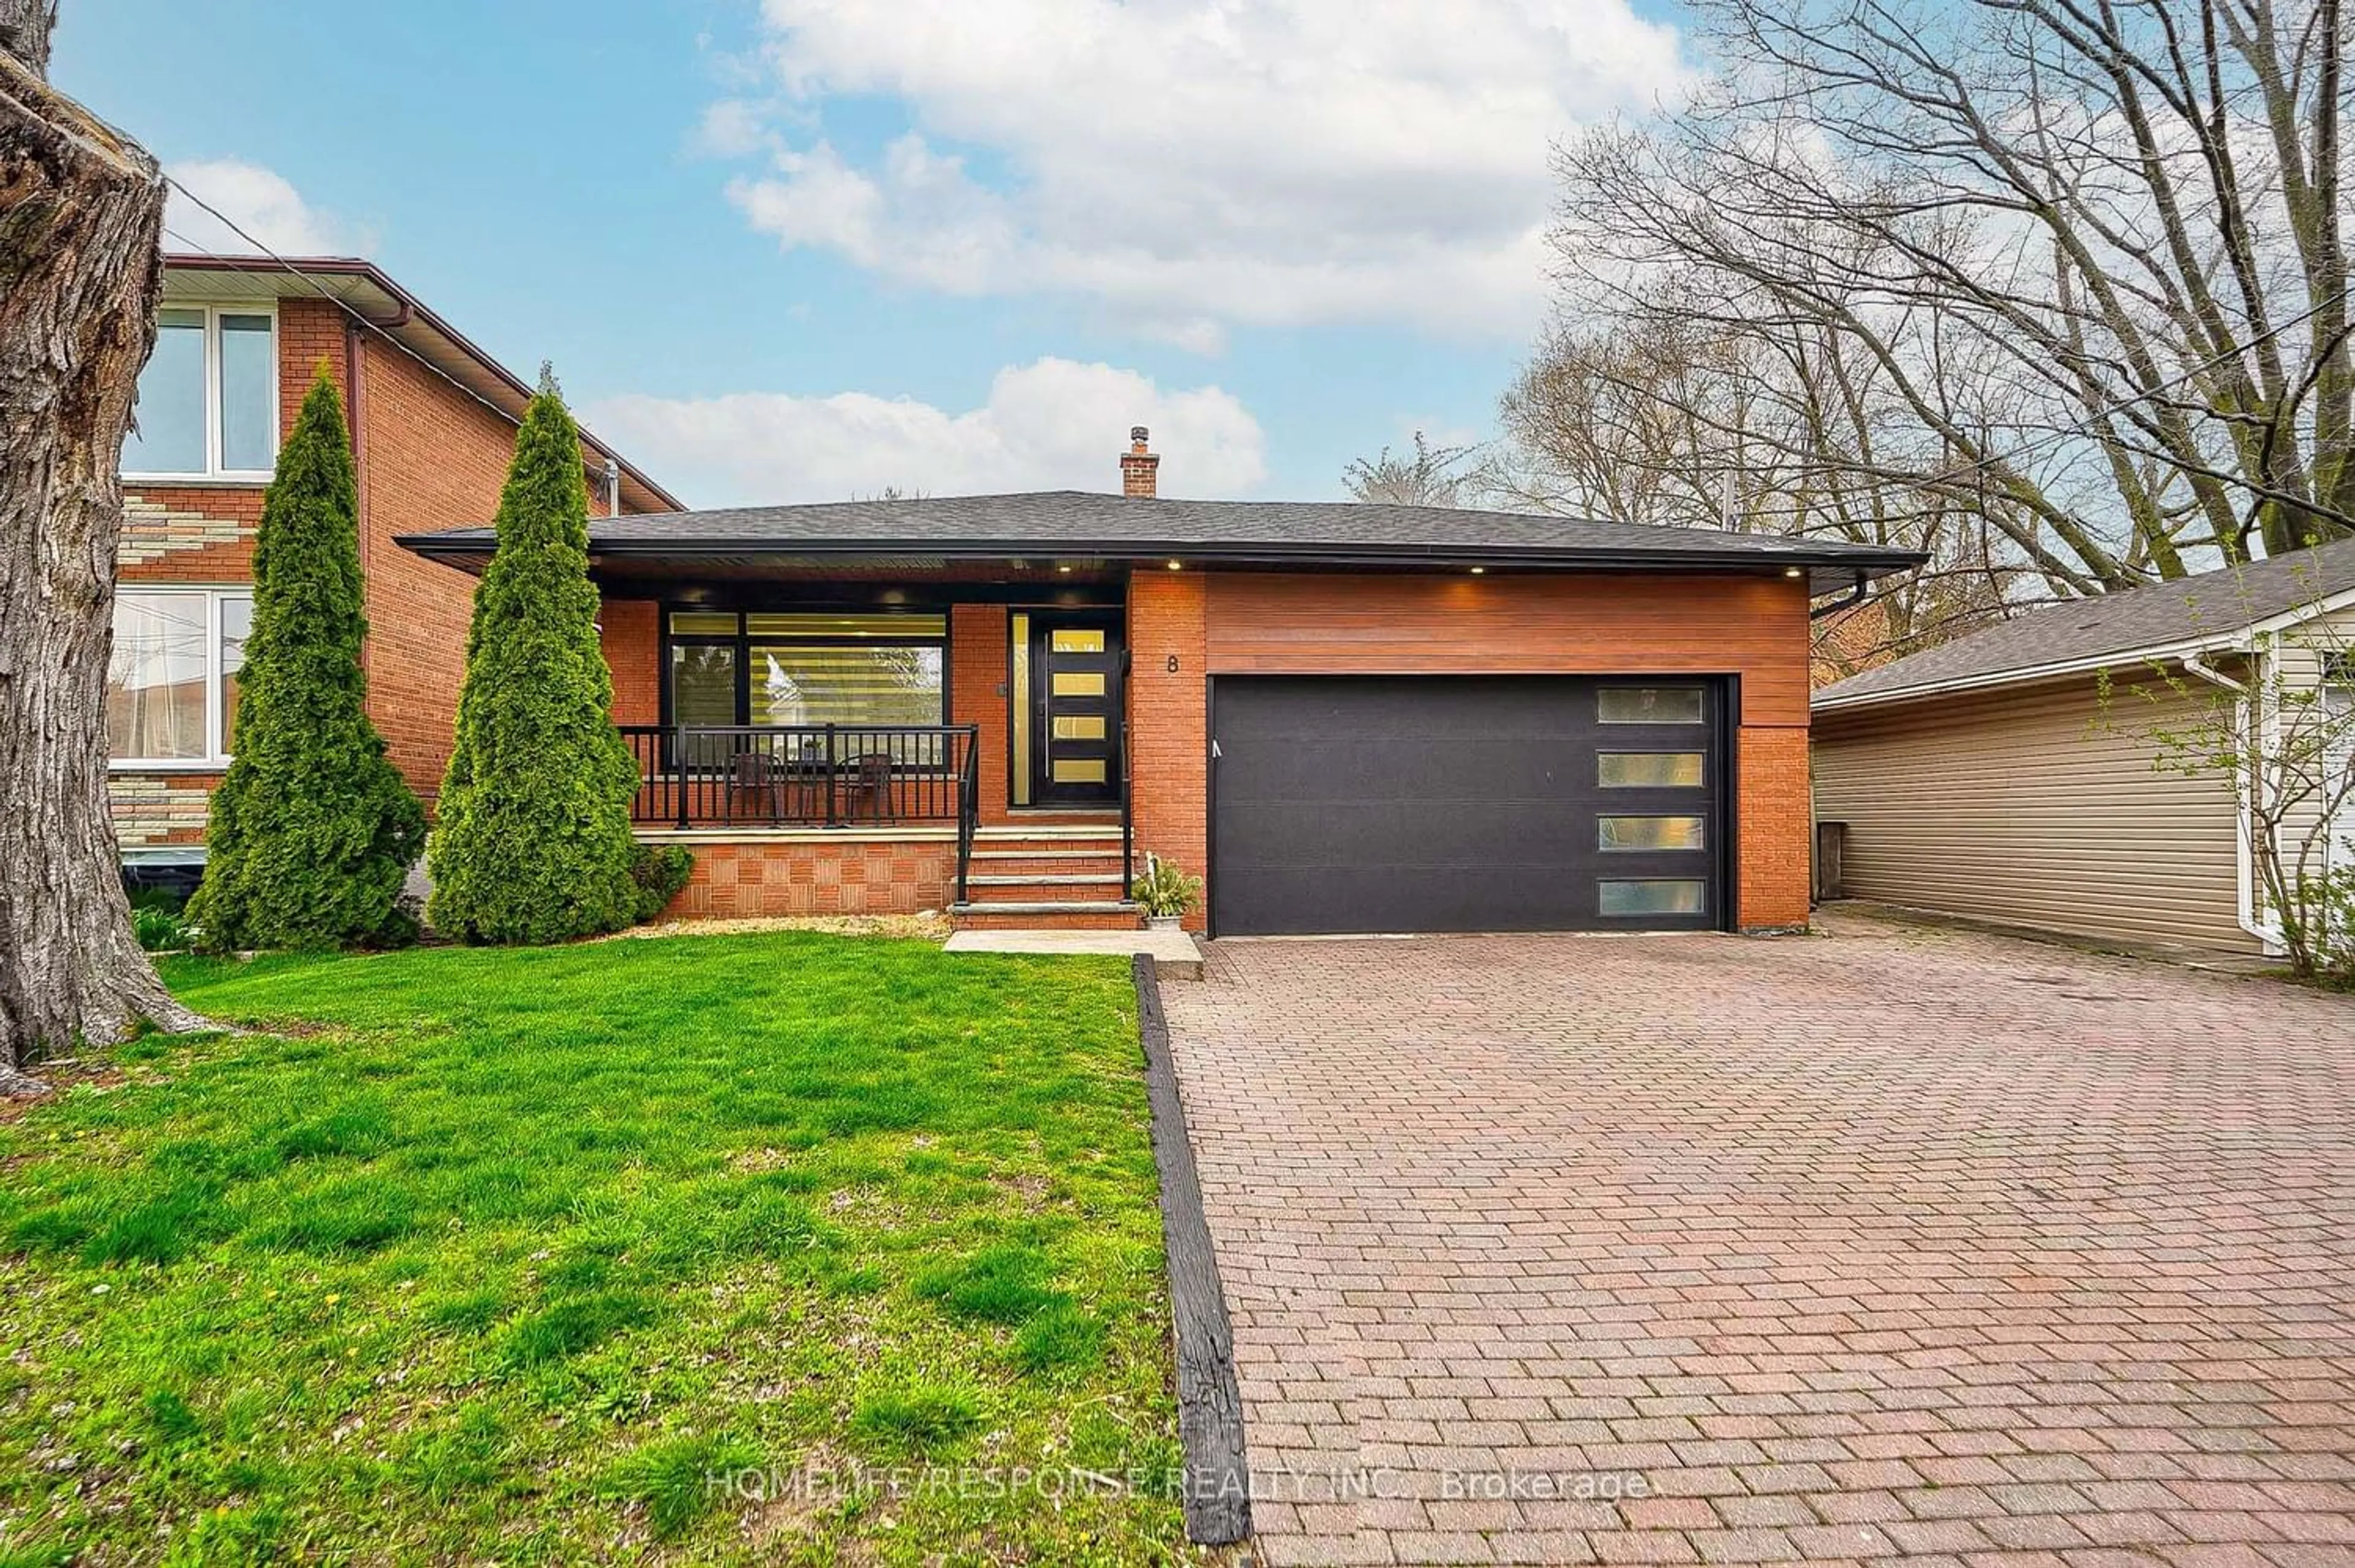 Home with brick exterior material for 8 Alcan Ave, Toronto Ontario M8W 1V1